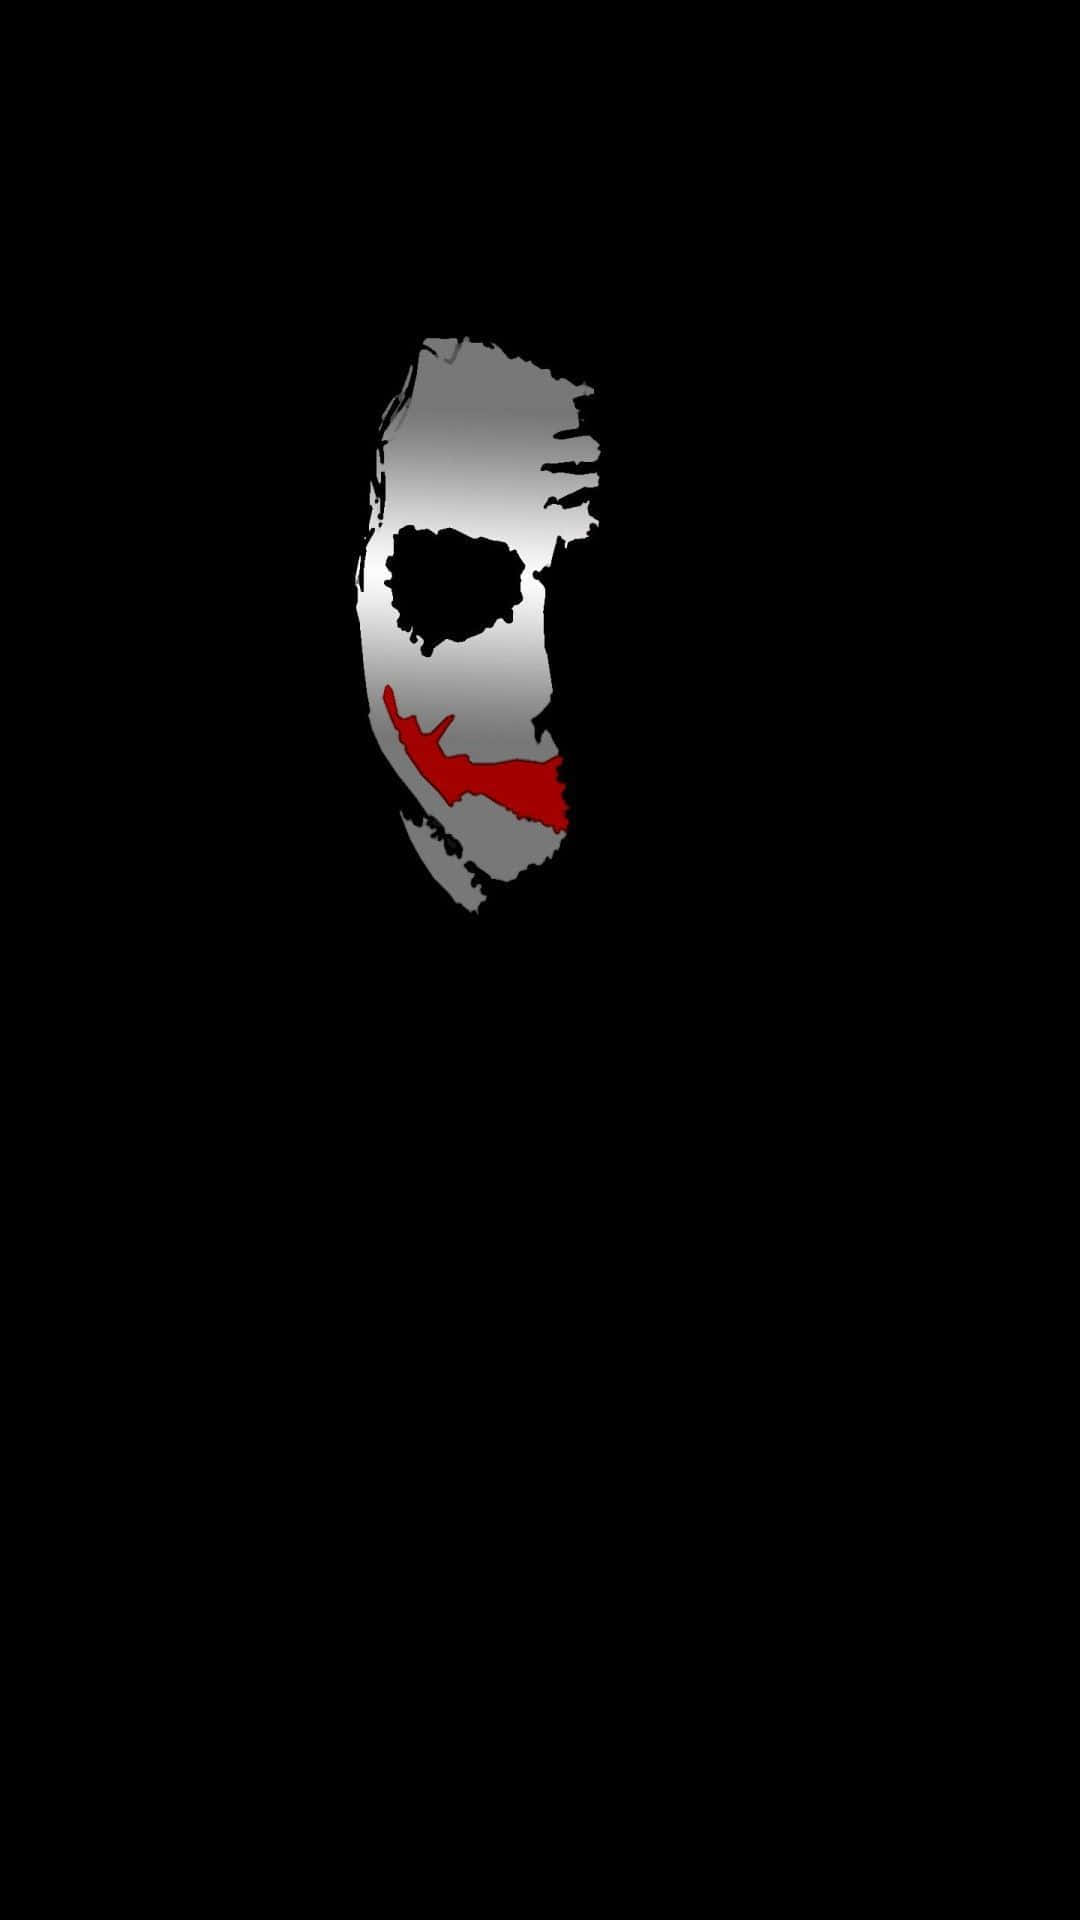 Amoled Background Joker's Face Side